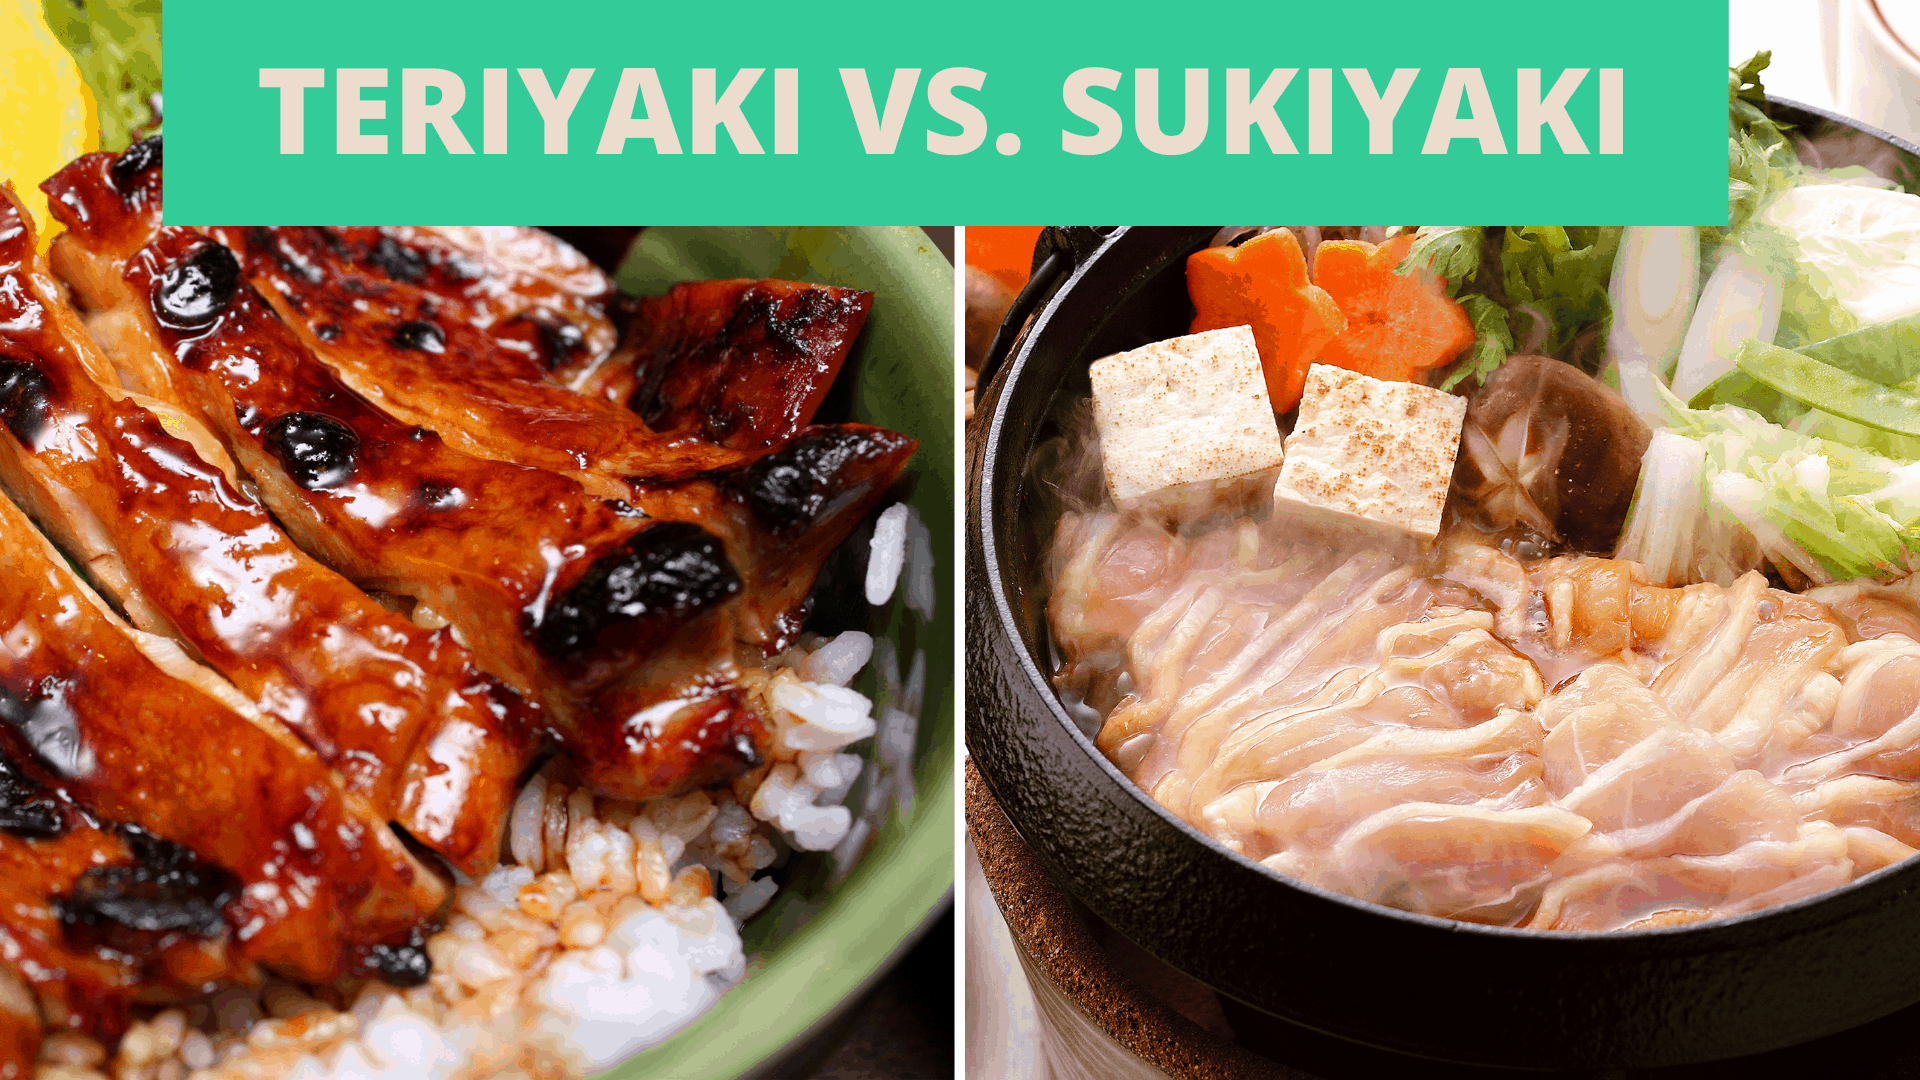 teriyaki vs sukiyaki comparison between these two classic Japanese dishes